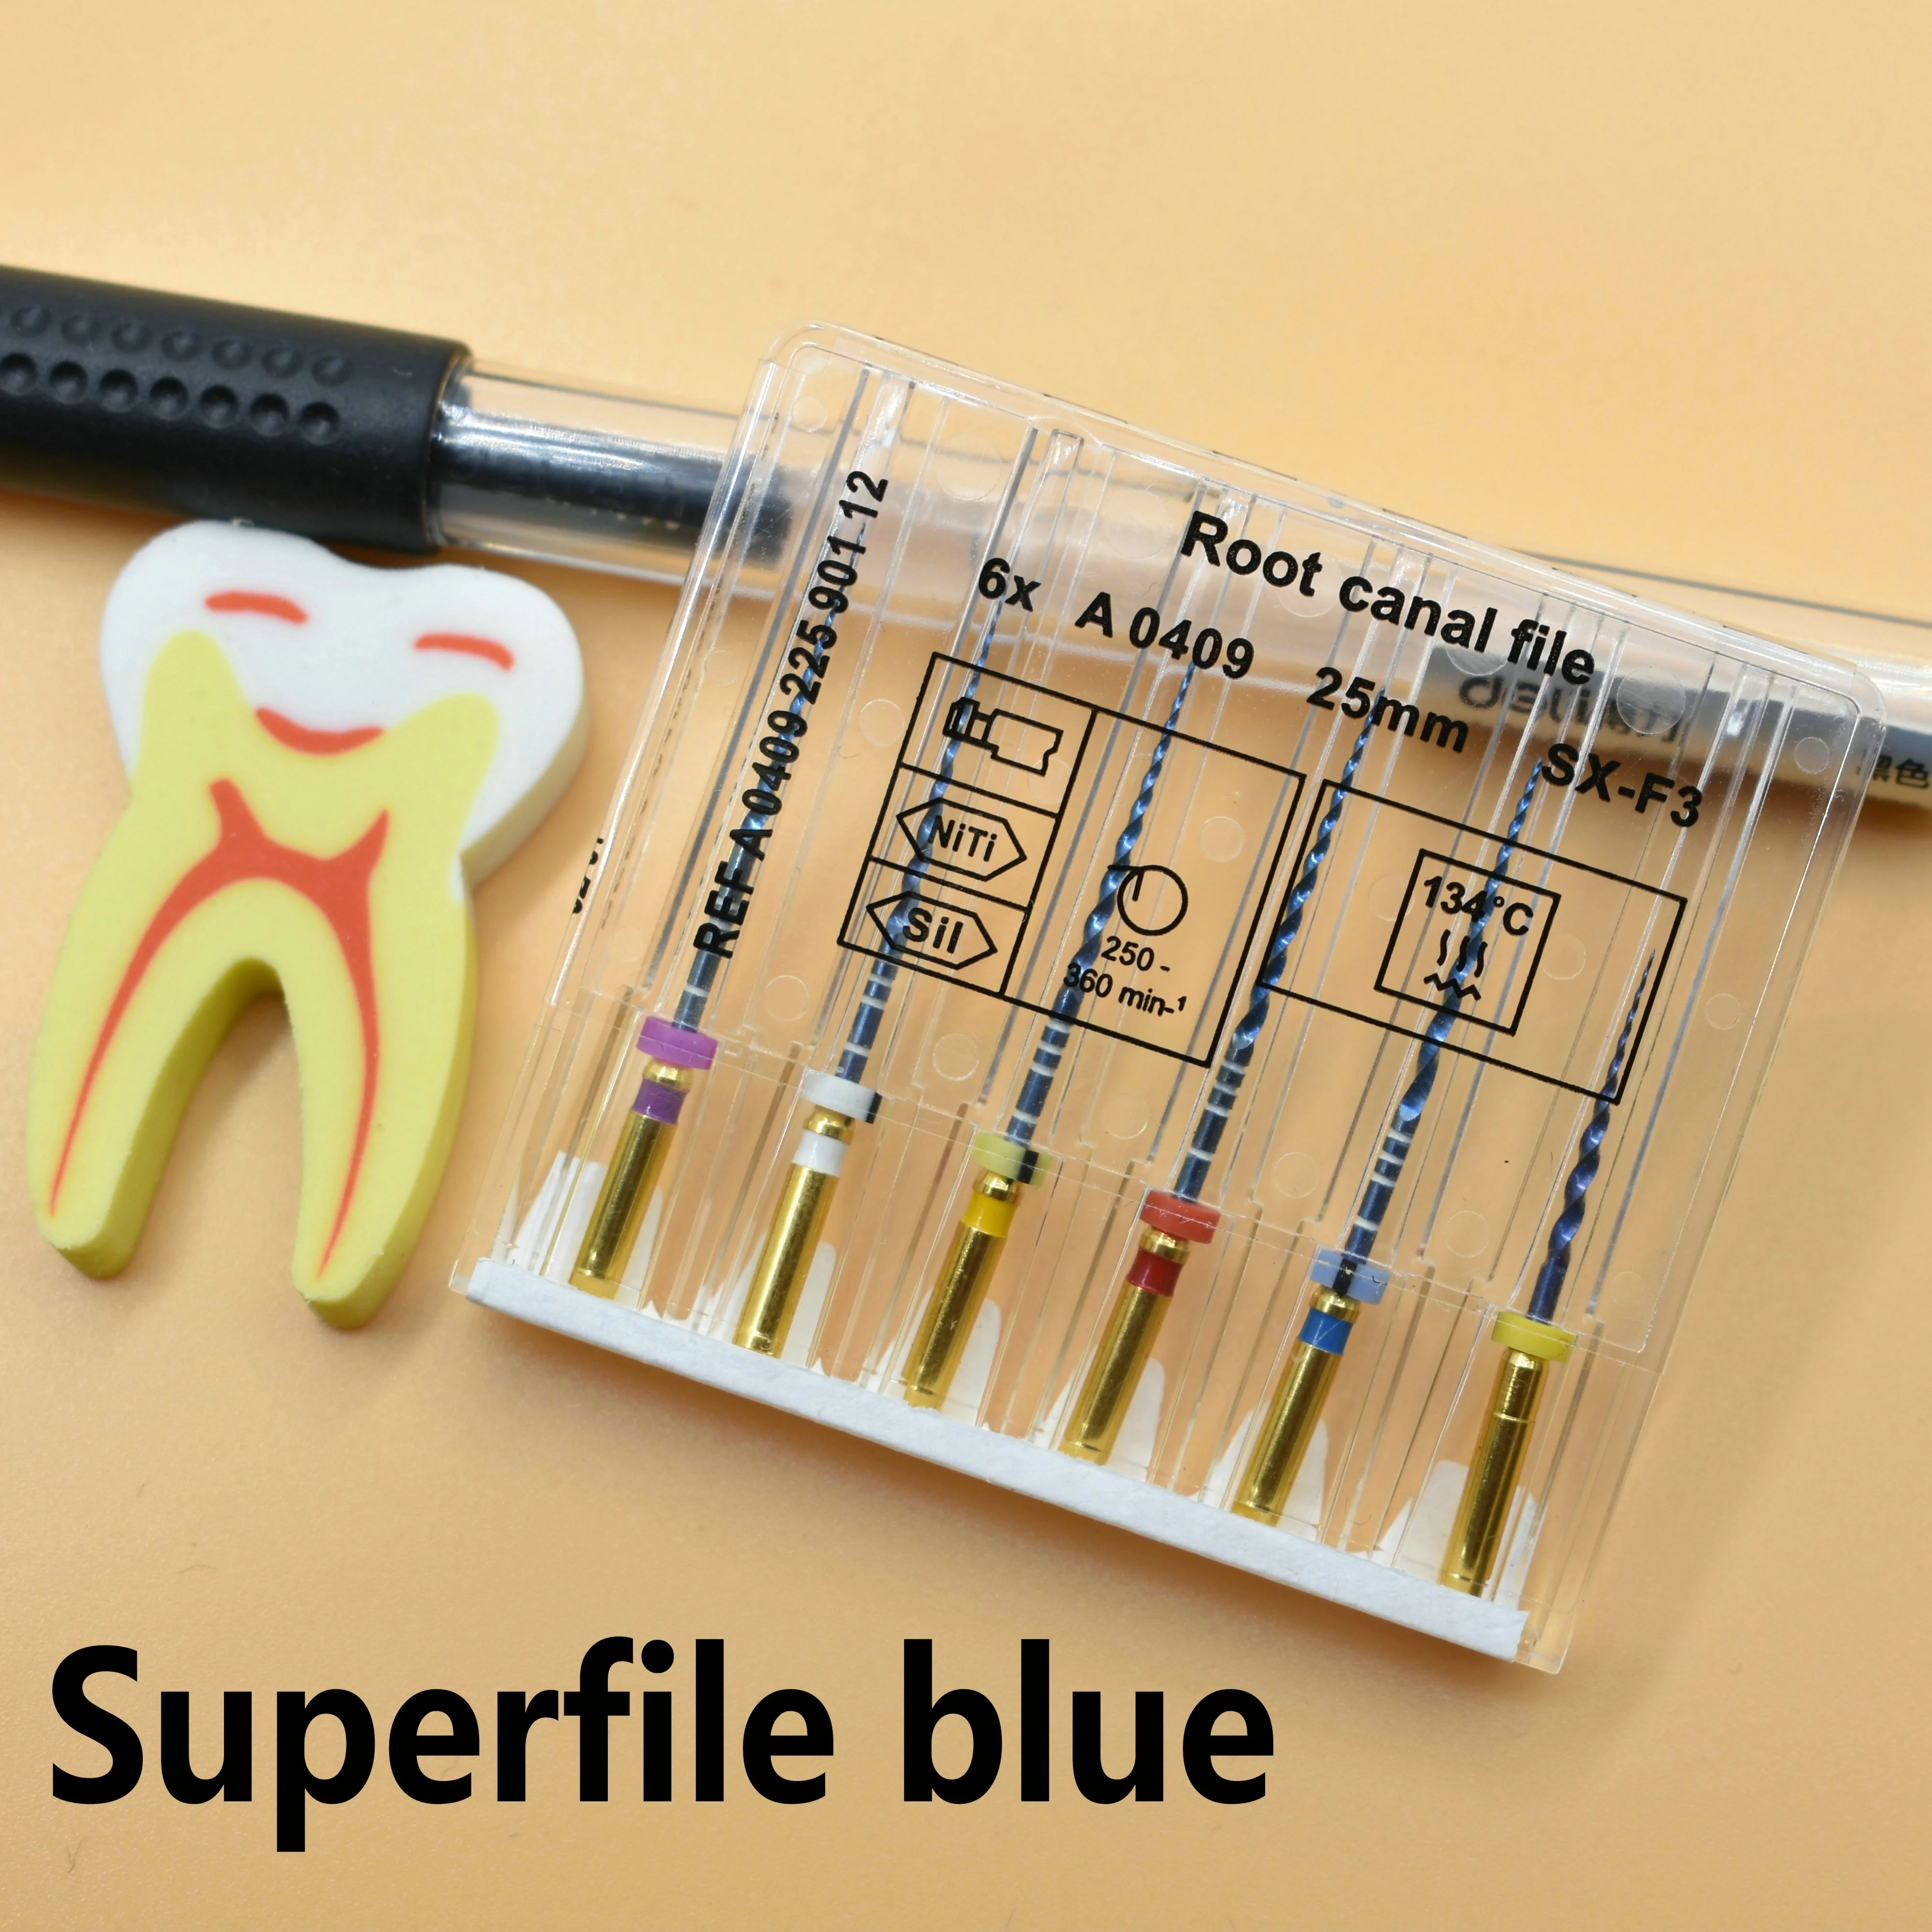 

Dental flexible super files Blue heat actication M-wire rott canal files 25mm niti instrument SX-F3 dentistry